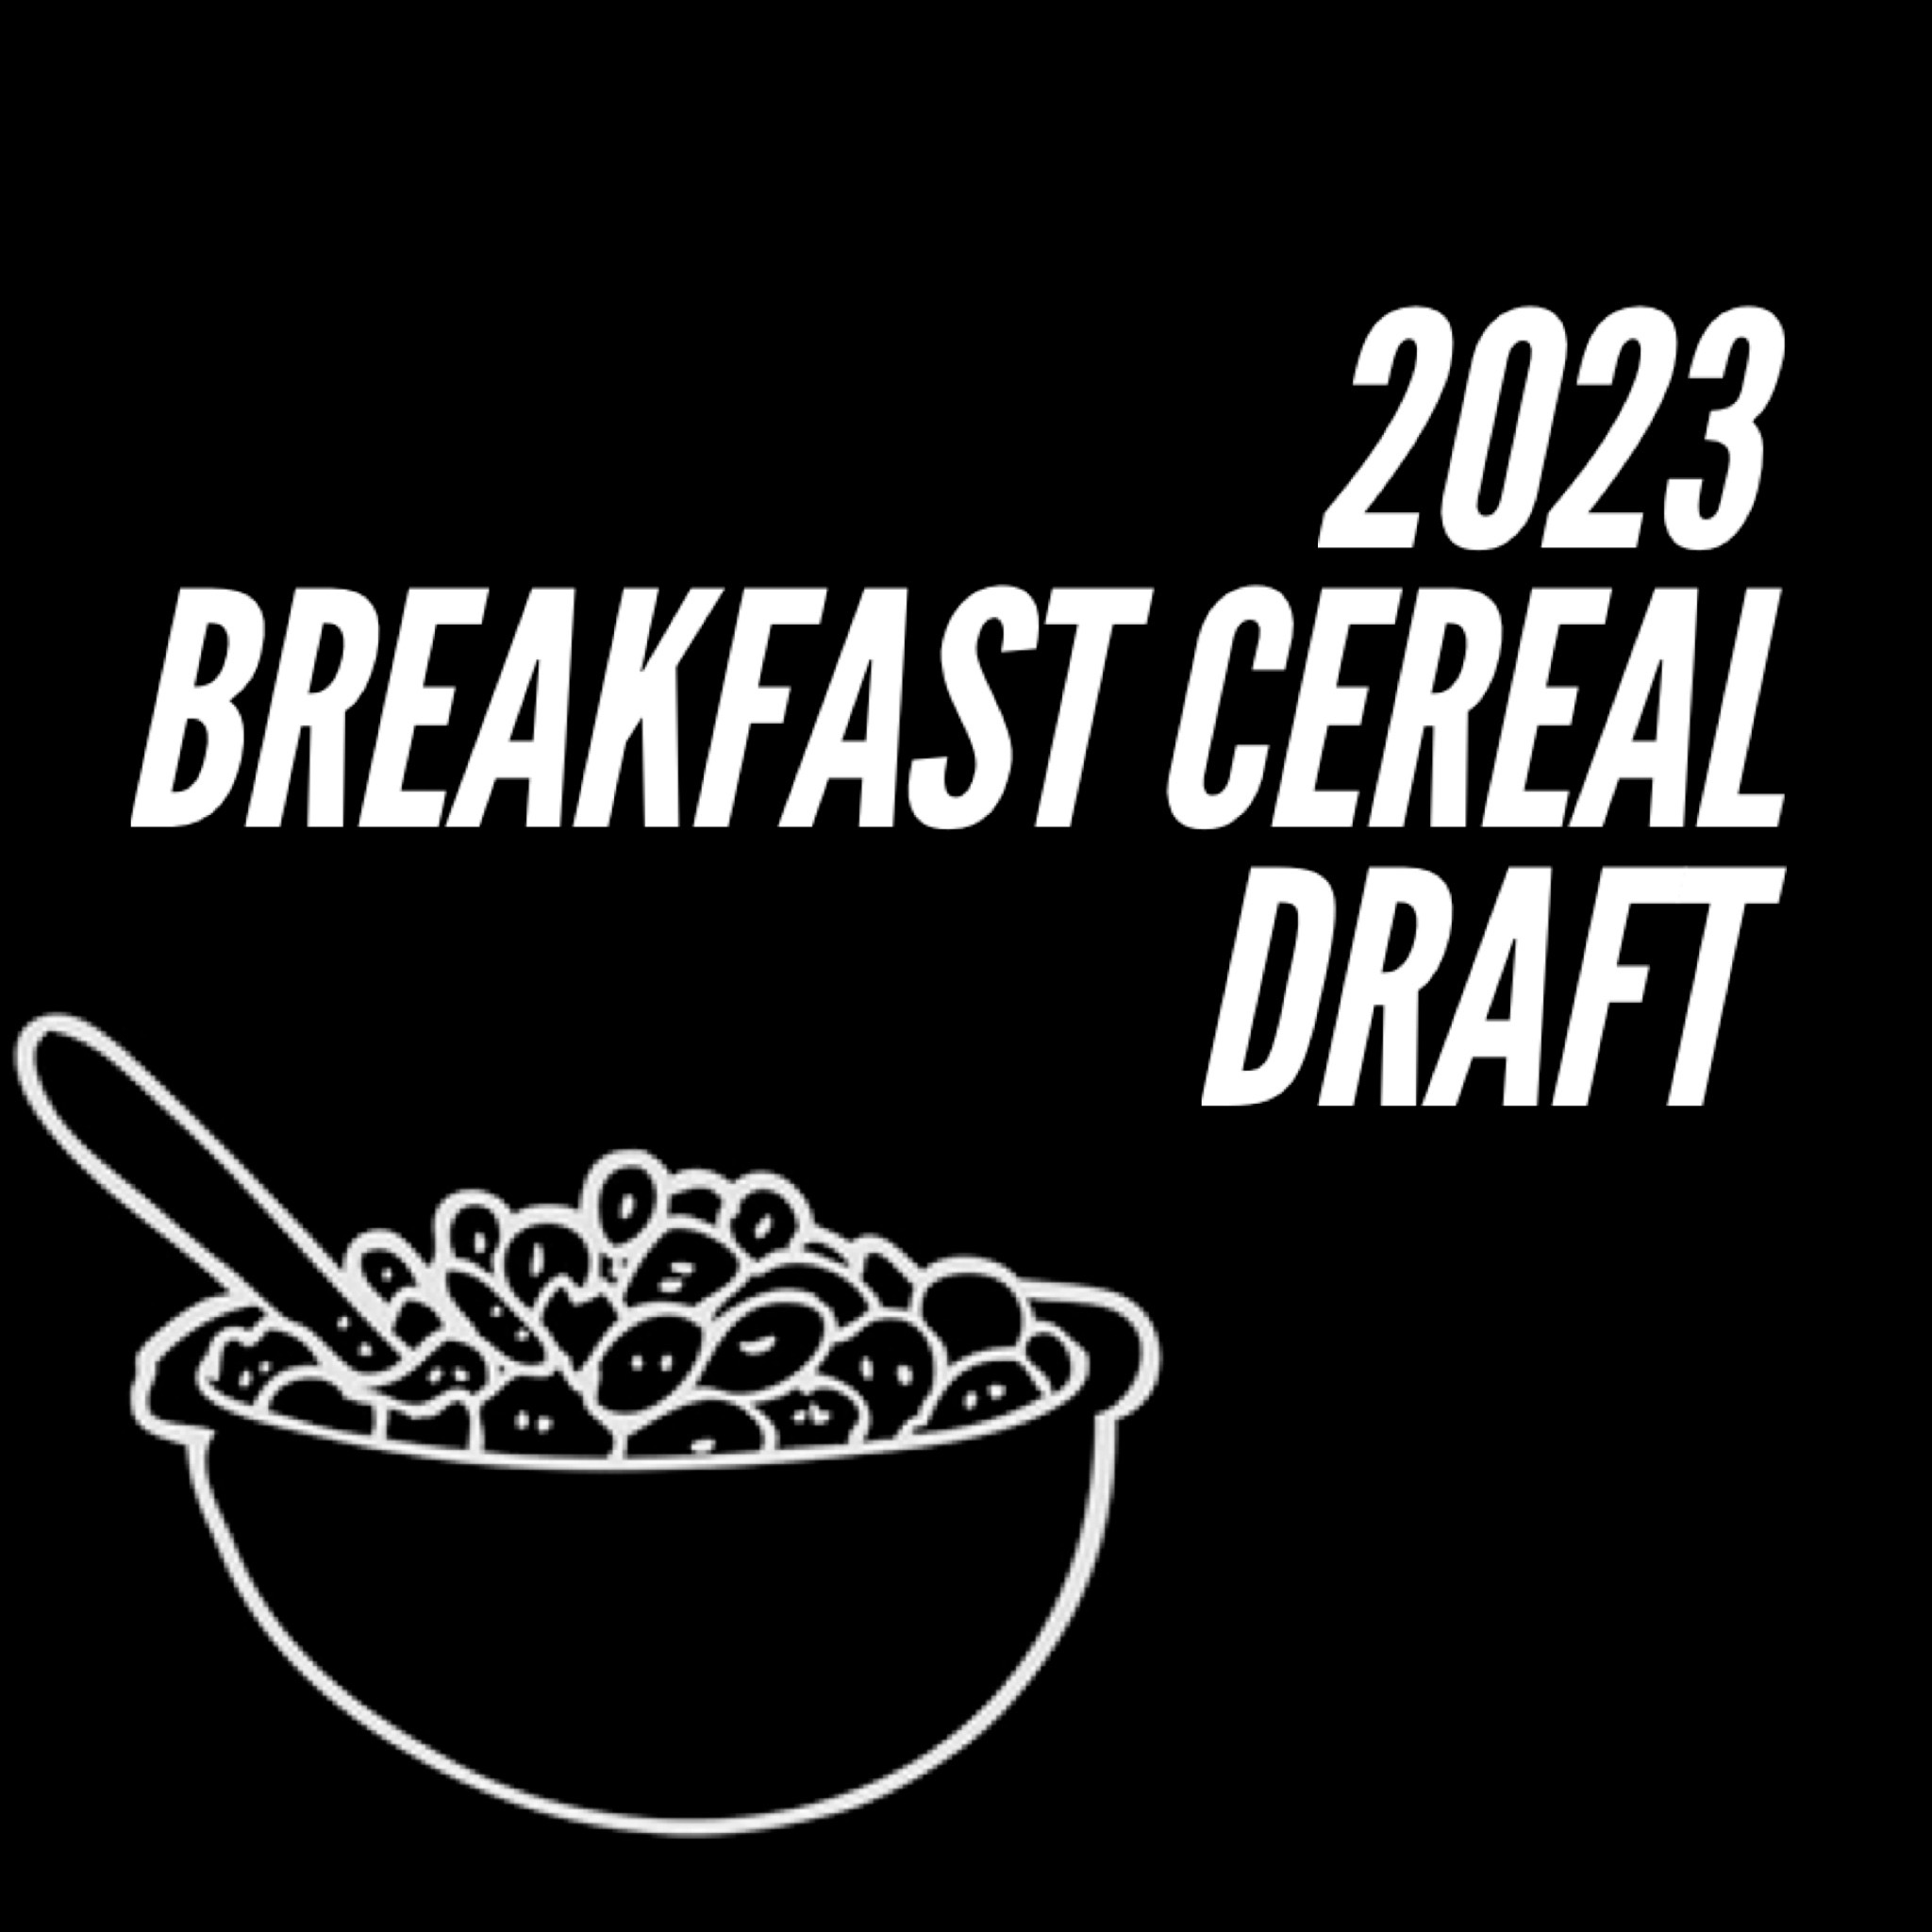 Breakfast Cereal Draft